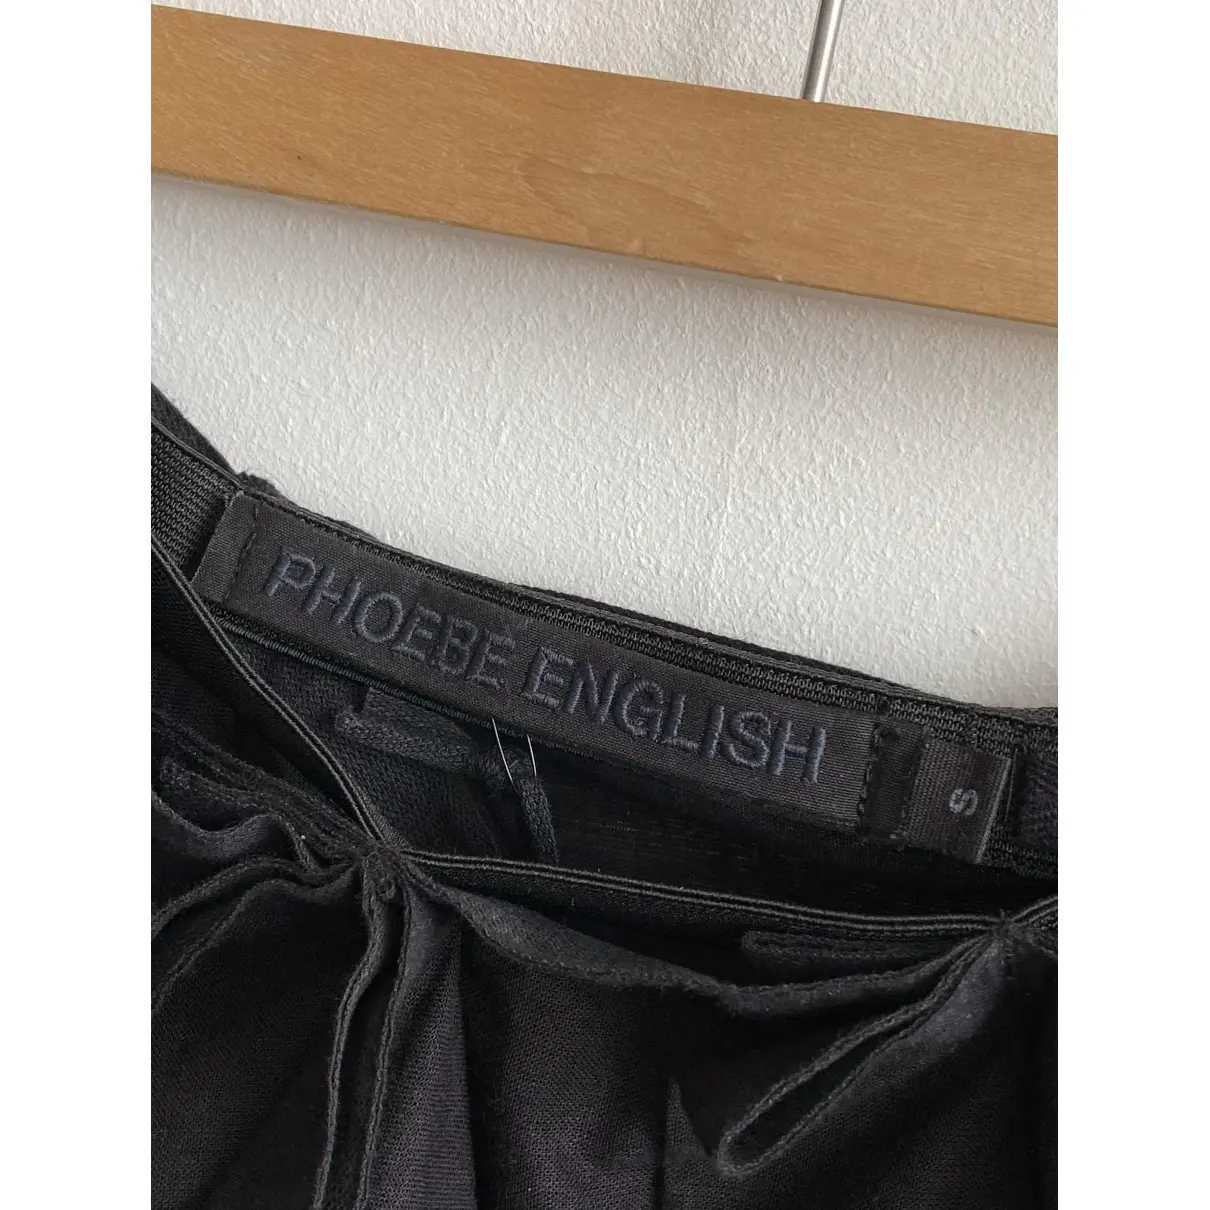 Buy Phoebe English Maxi skirt online